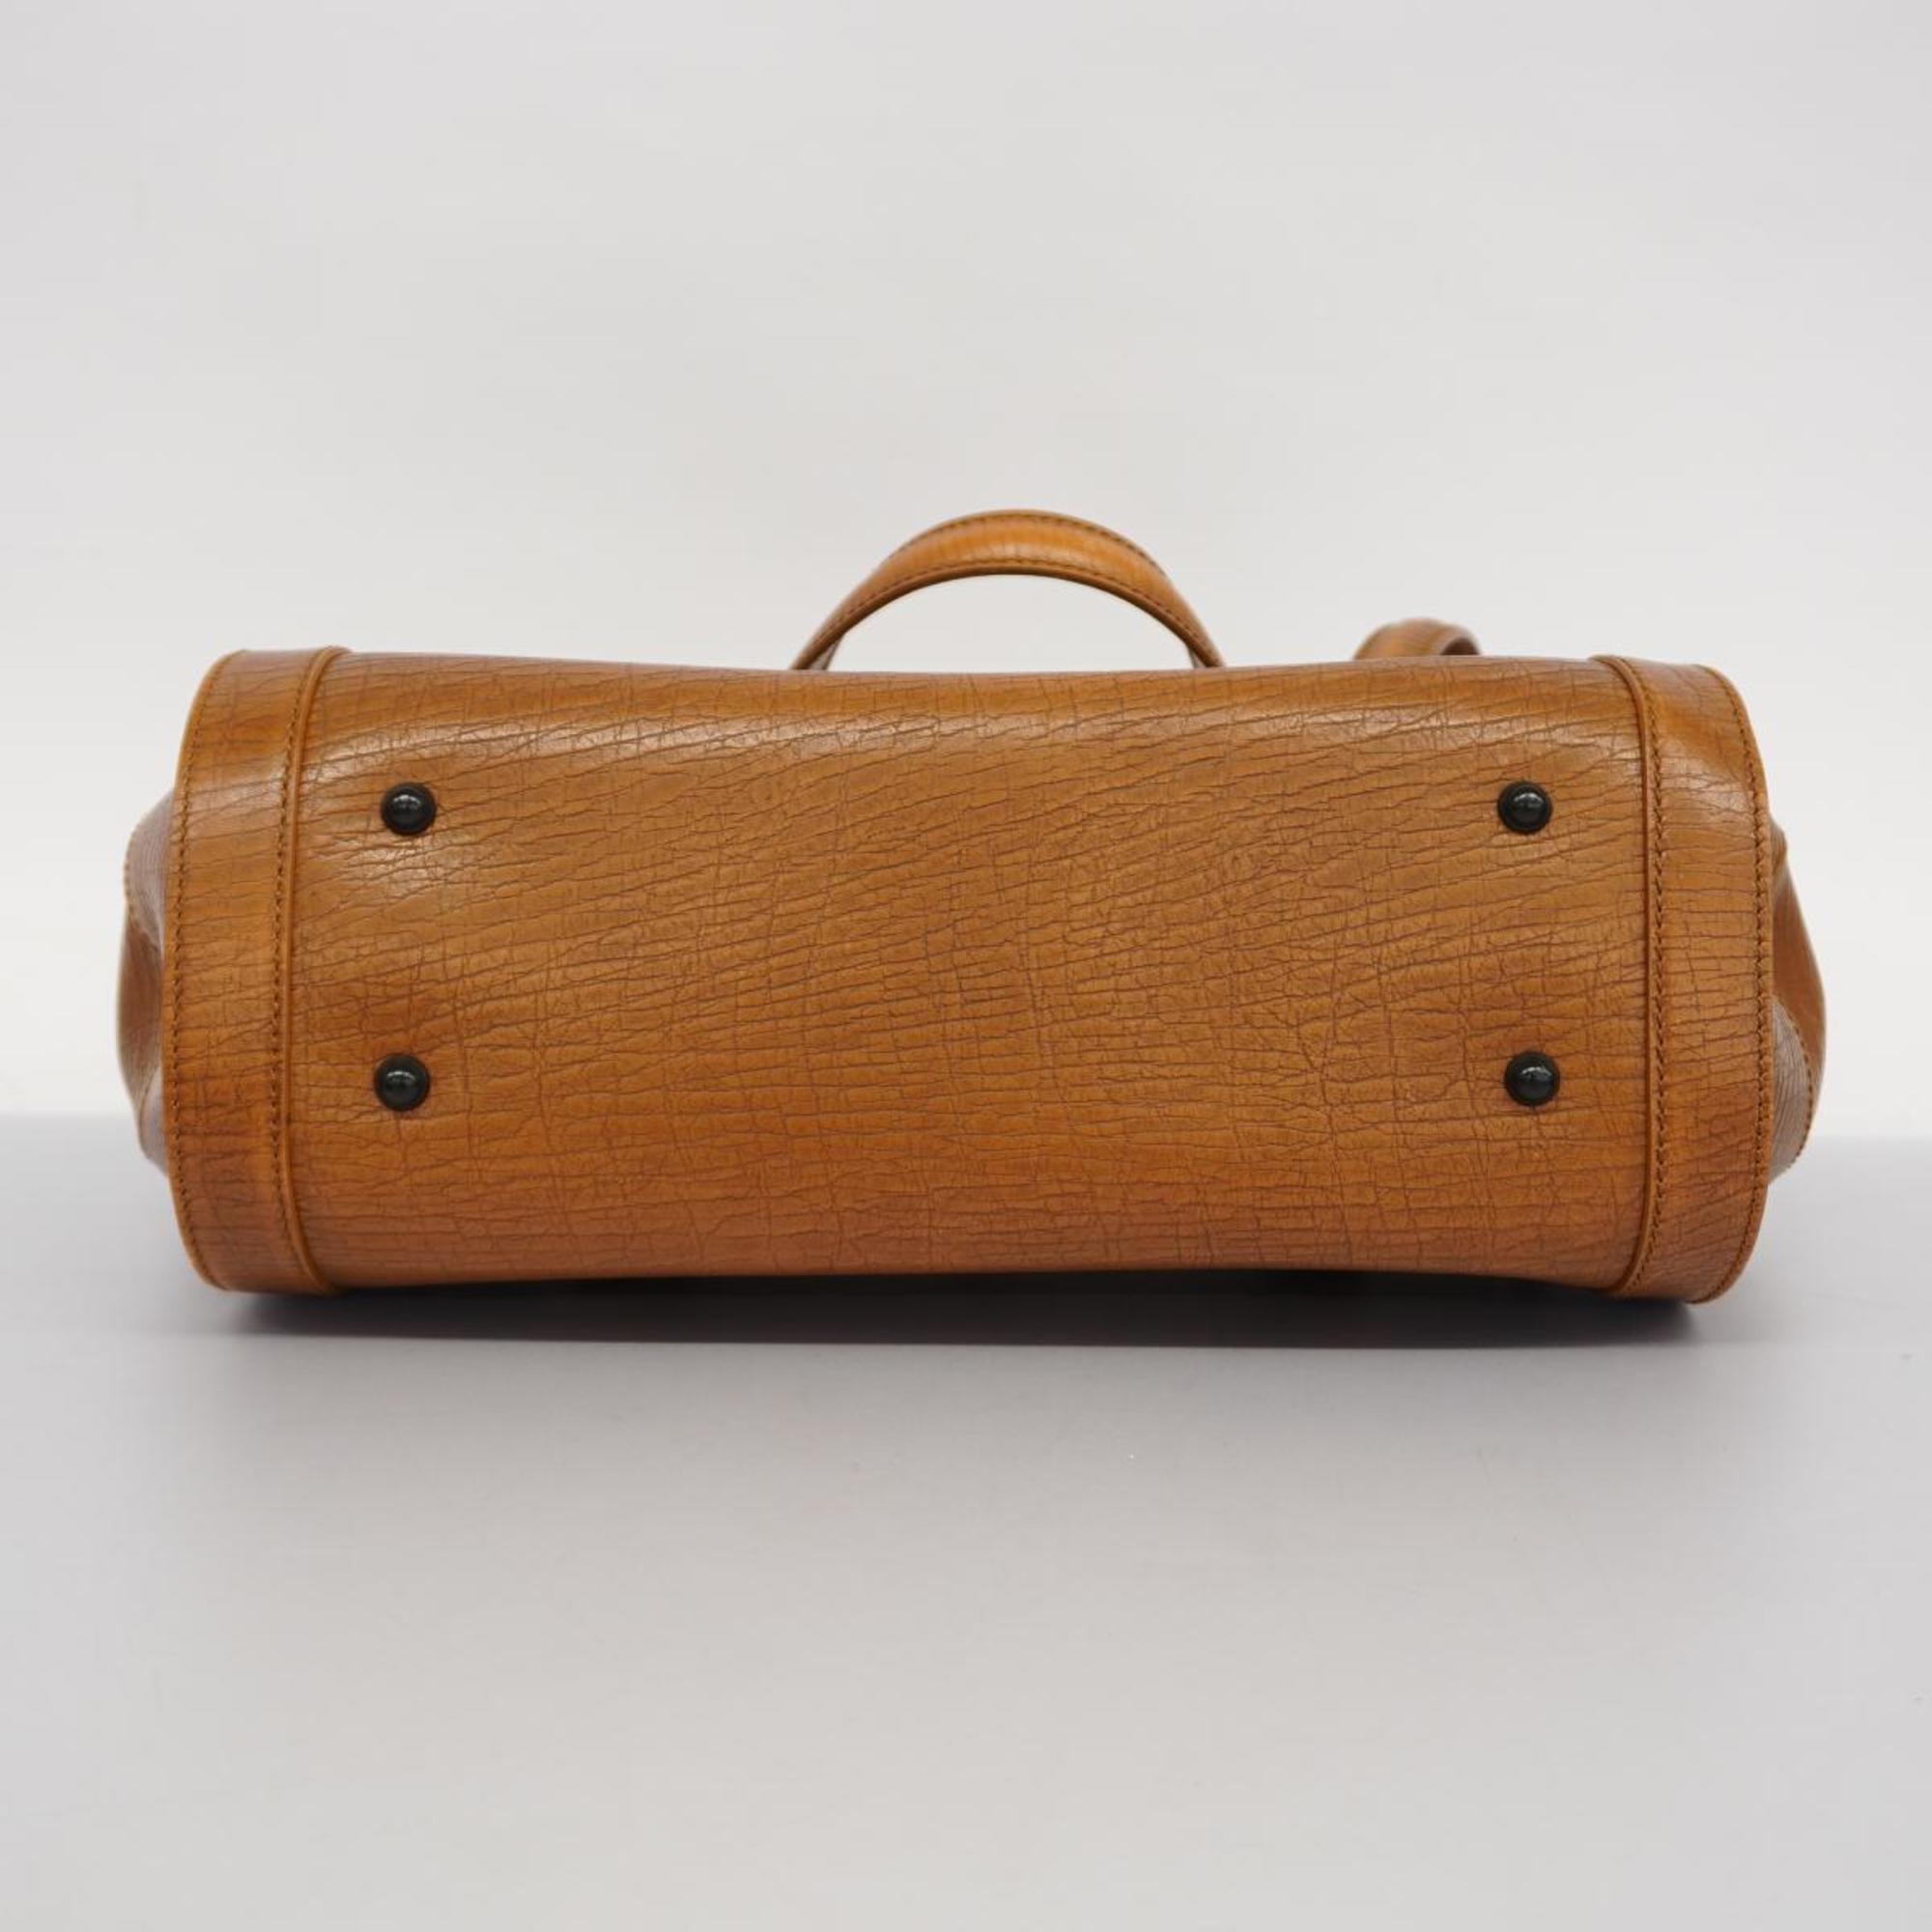 Gucci Bamboo Handbag 111713 Leather Brown Women's